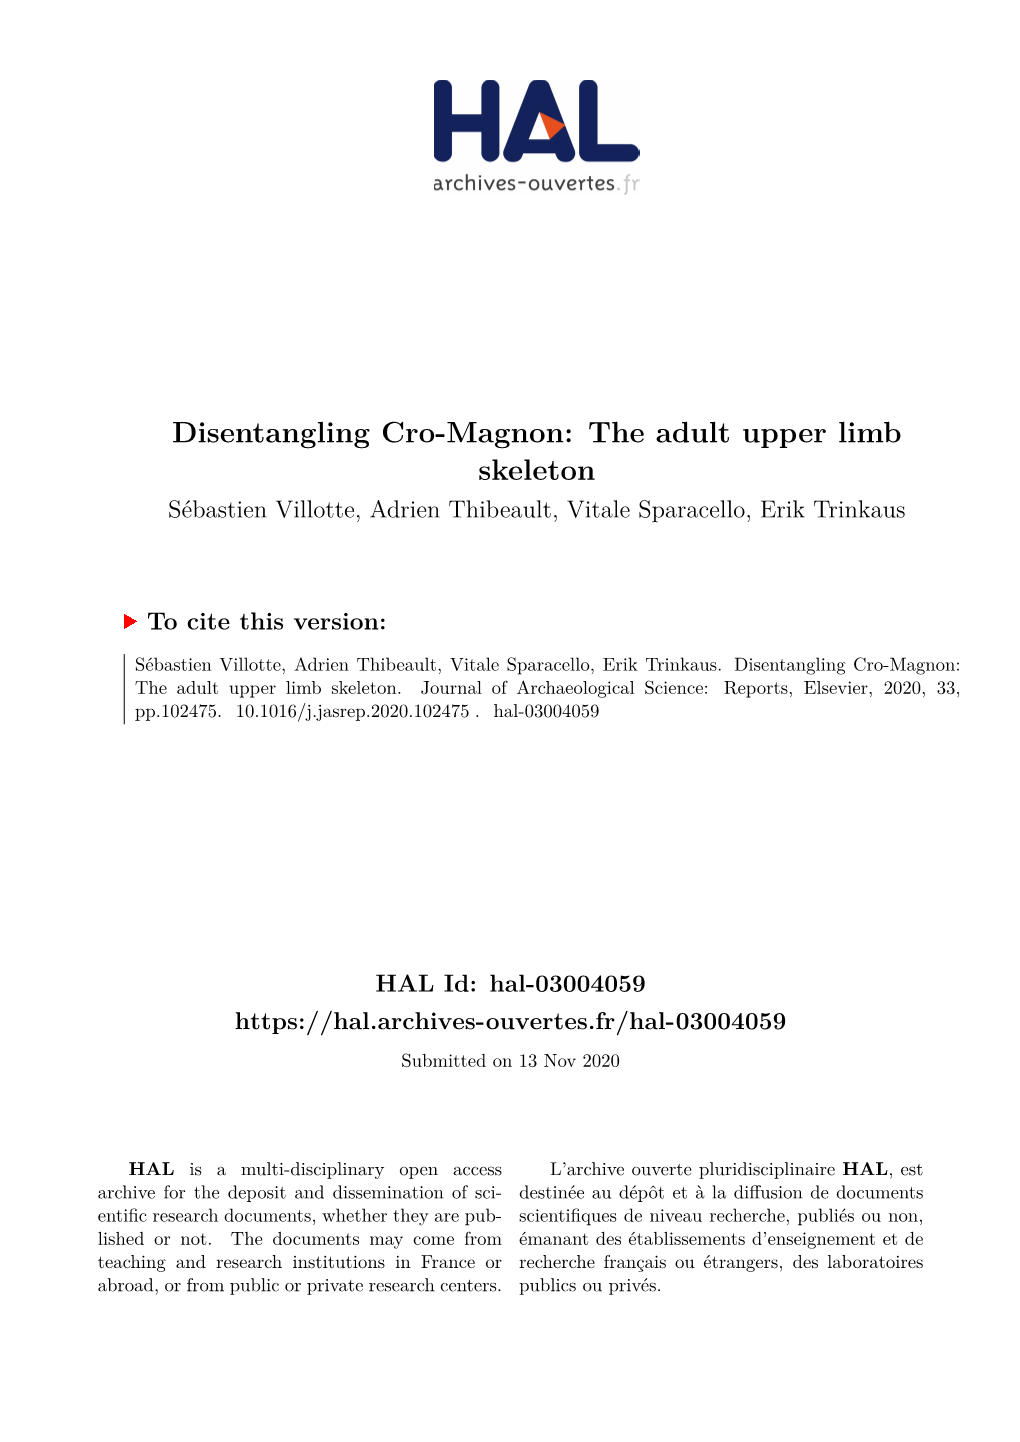 Disentangling Cro-Magnon: the Adult Upper Limb Skeleton Sébastien Villotte, Adrien Thibeault, Vitale Sparacello, Erik Trinkaus